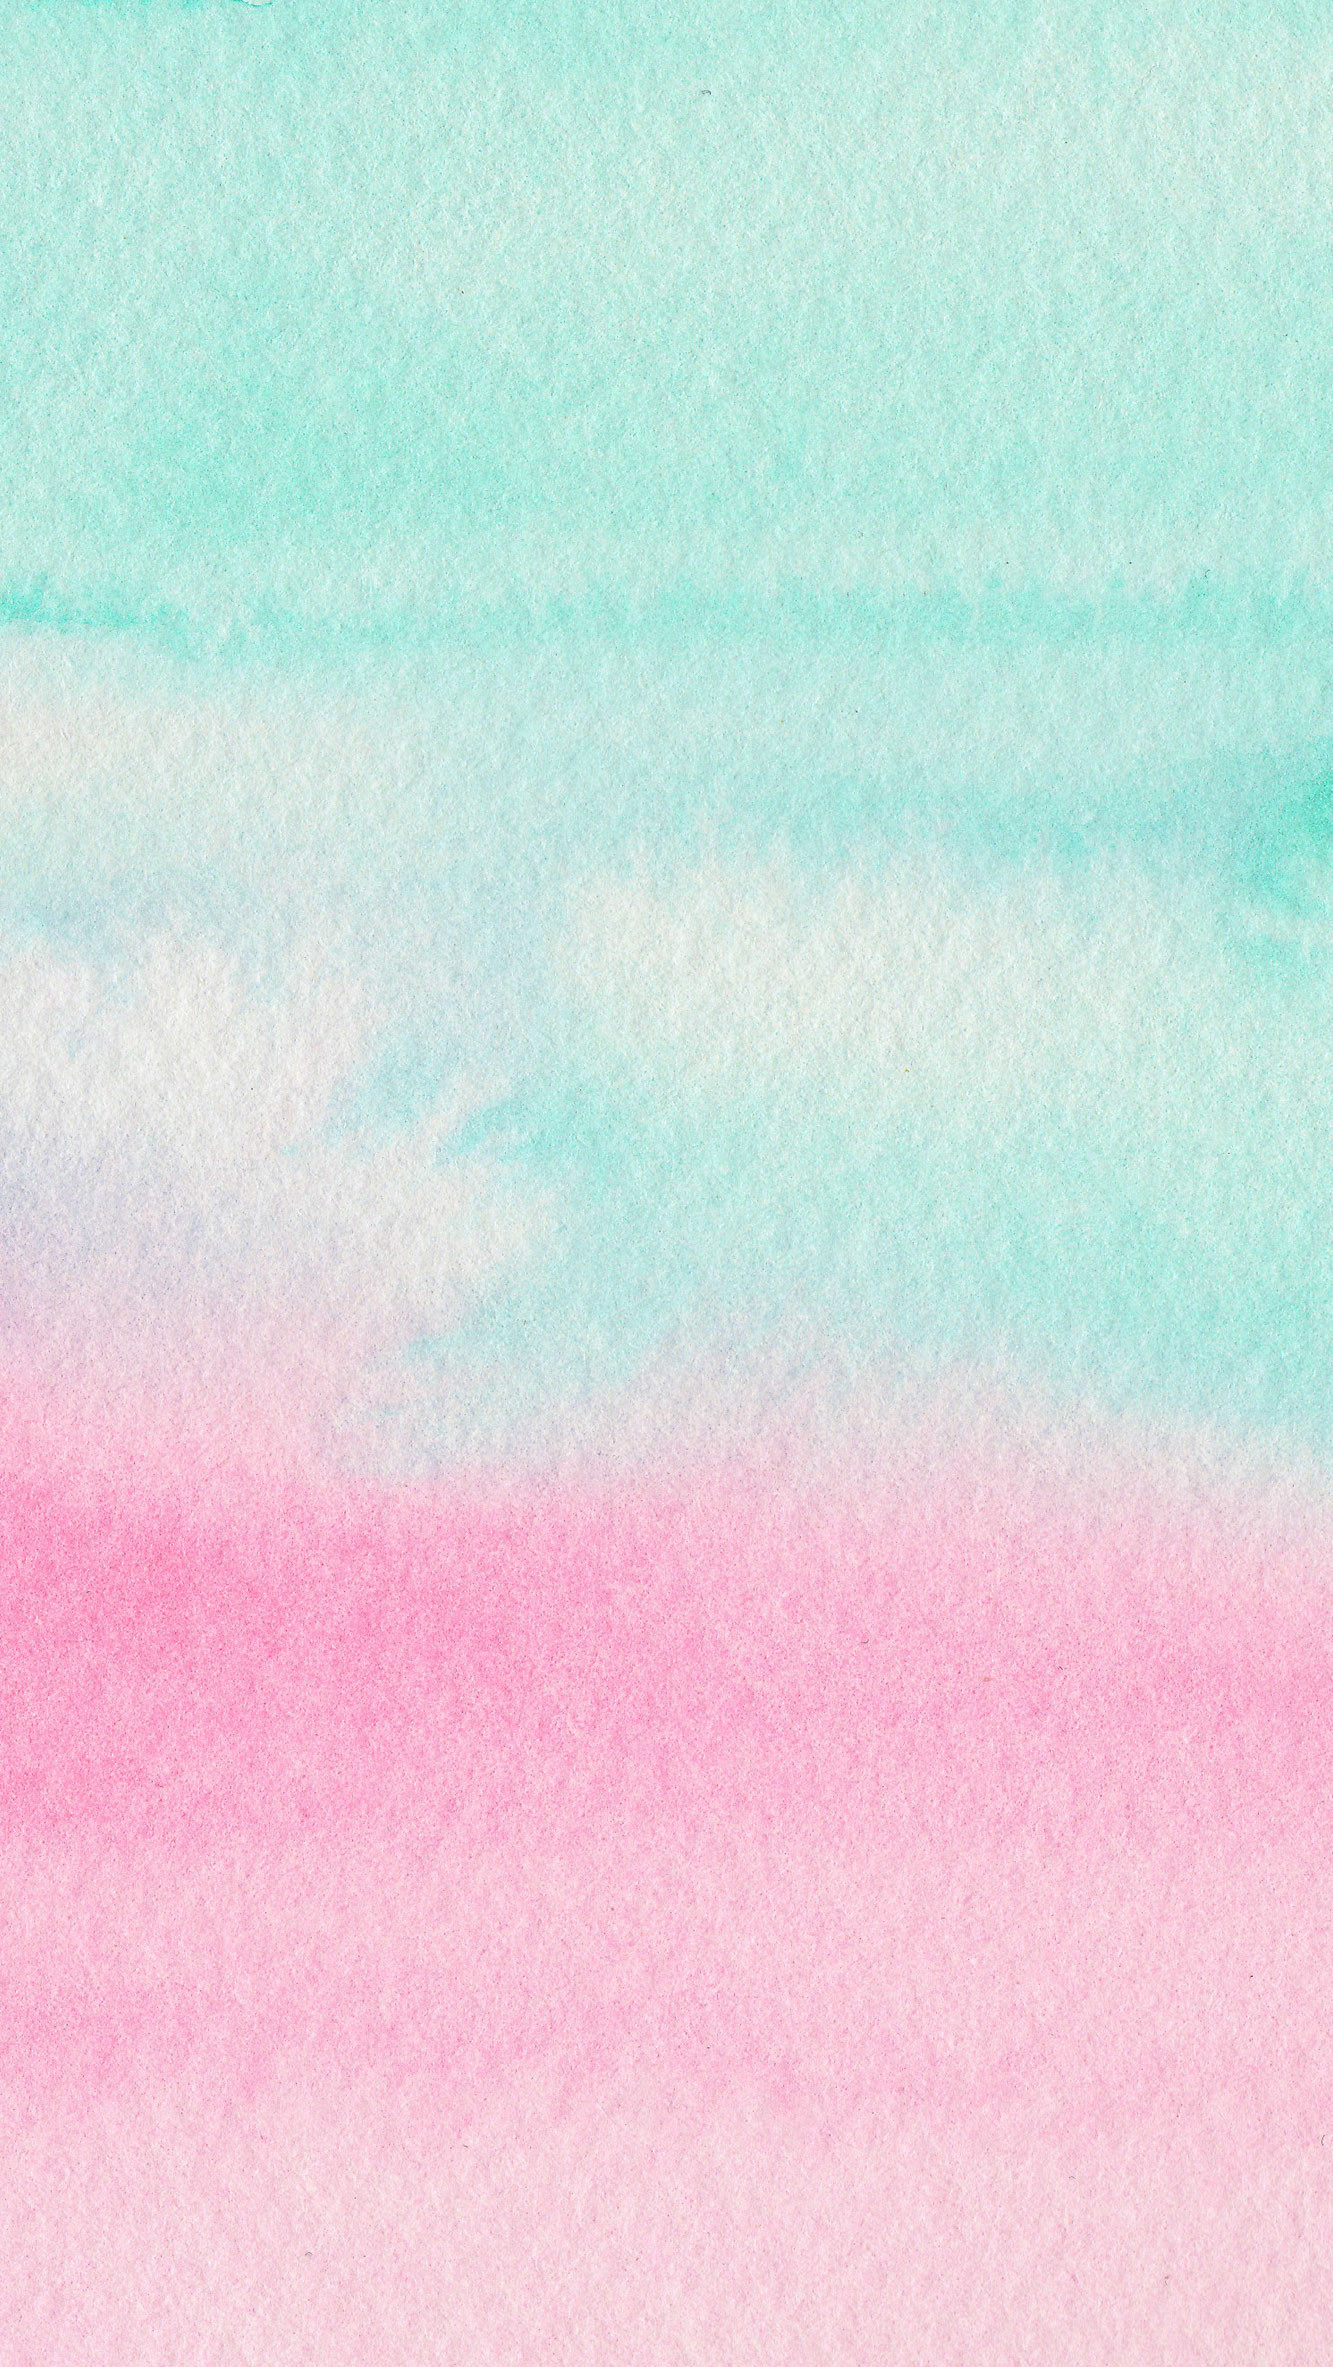 Mint Aqua pink watercolour ombre texture iphone wallpaper phone background lock